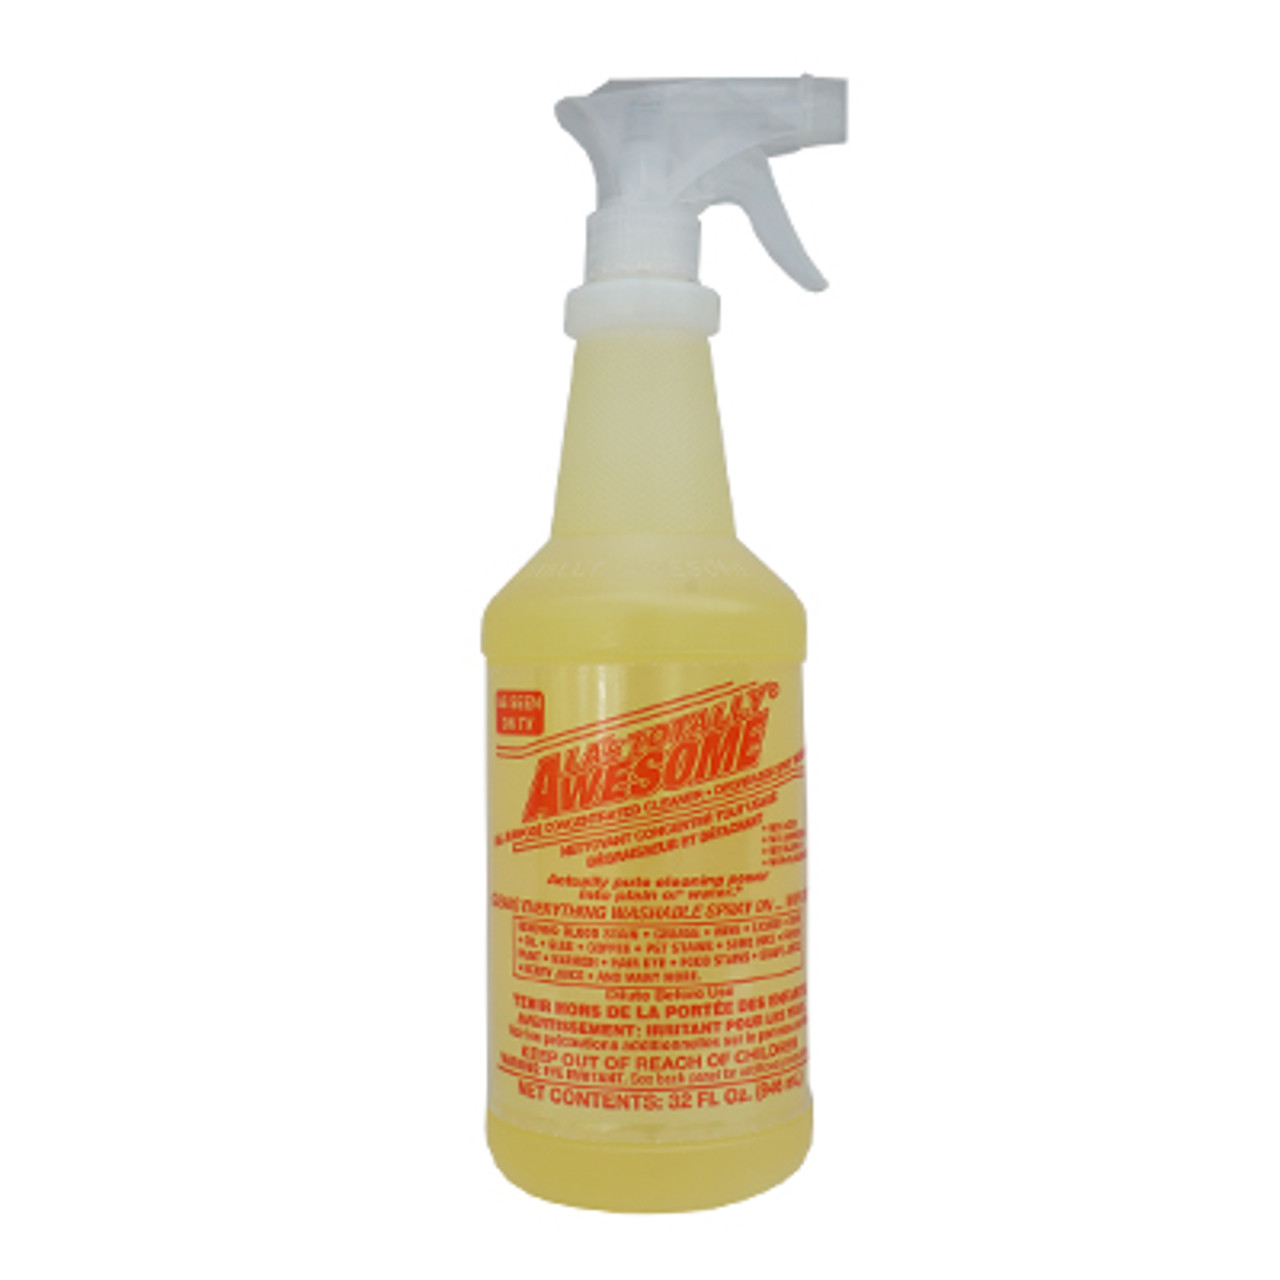 Zeptastic All-Purpose Cleaner and Degreaser - 3257 - Refreshing Lavender Fragrance Neutralizes Unpleasant Odors for 24 Hours (12, 32 fl oz)